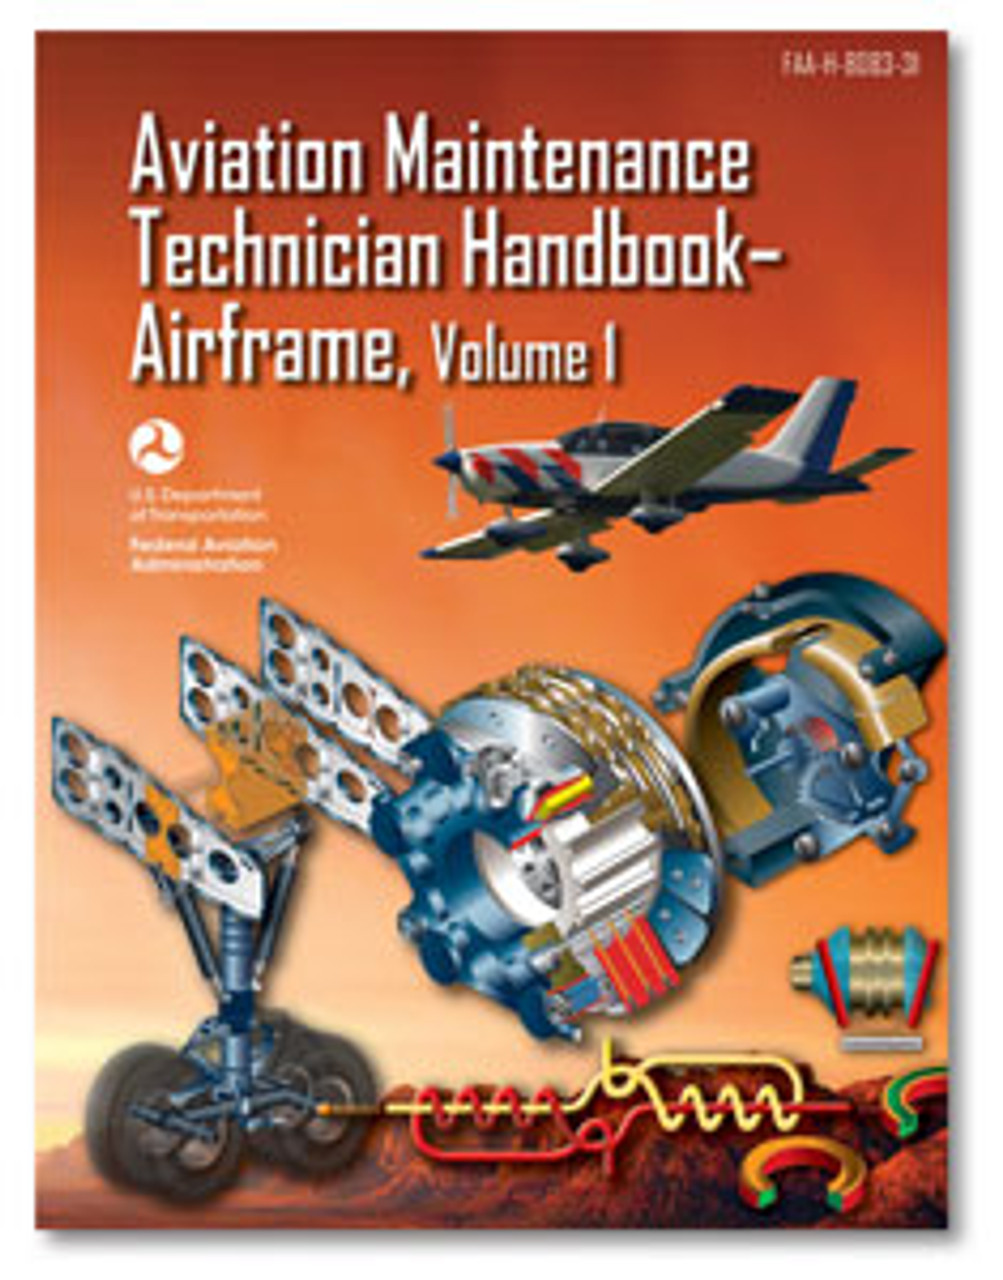 ASA: Aviation Maintenance Technician Handbook: Airframe Volume 1